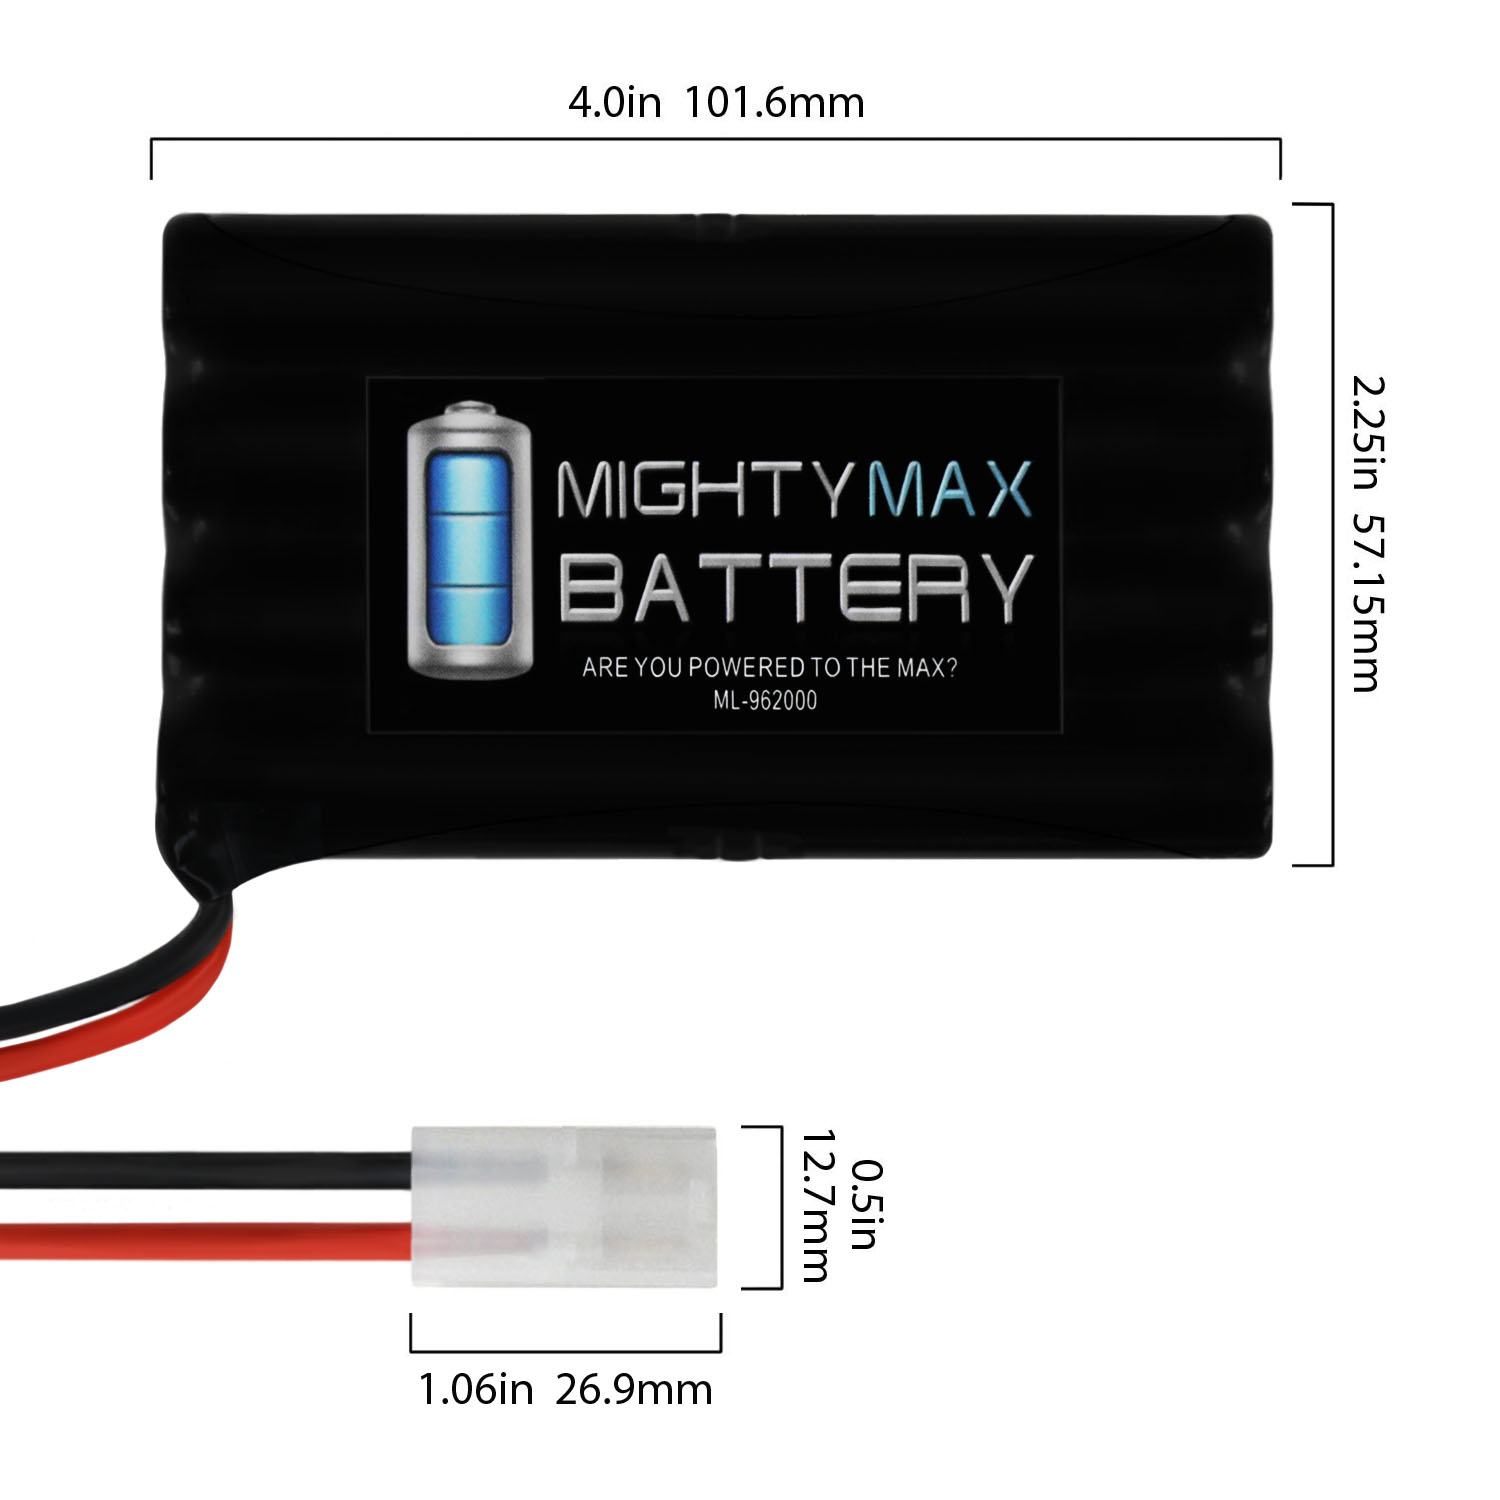 9.6V NiMH 2000mAh High Capacity Battery + 8.4V-9.6V NiMH Smart Charger